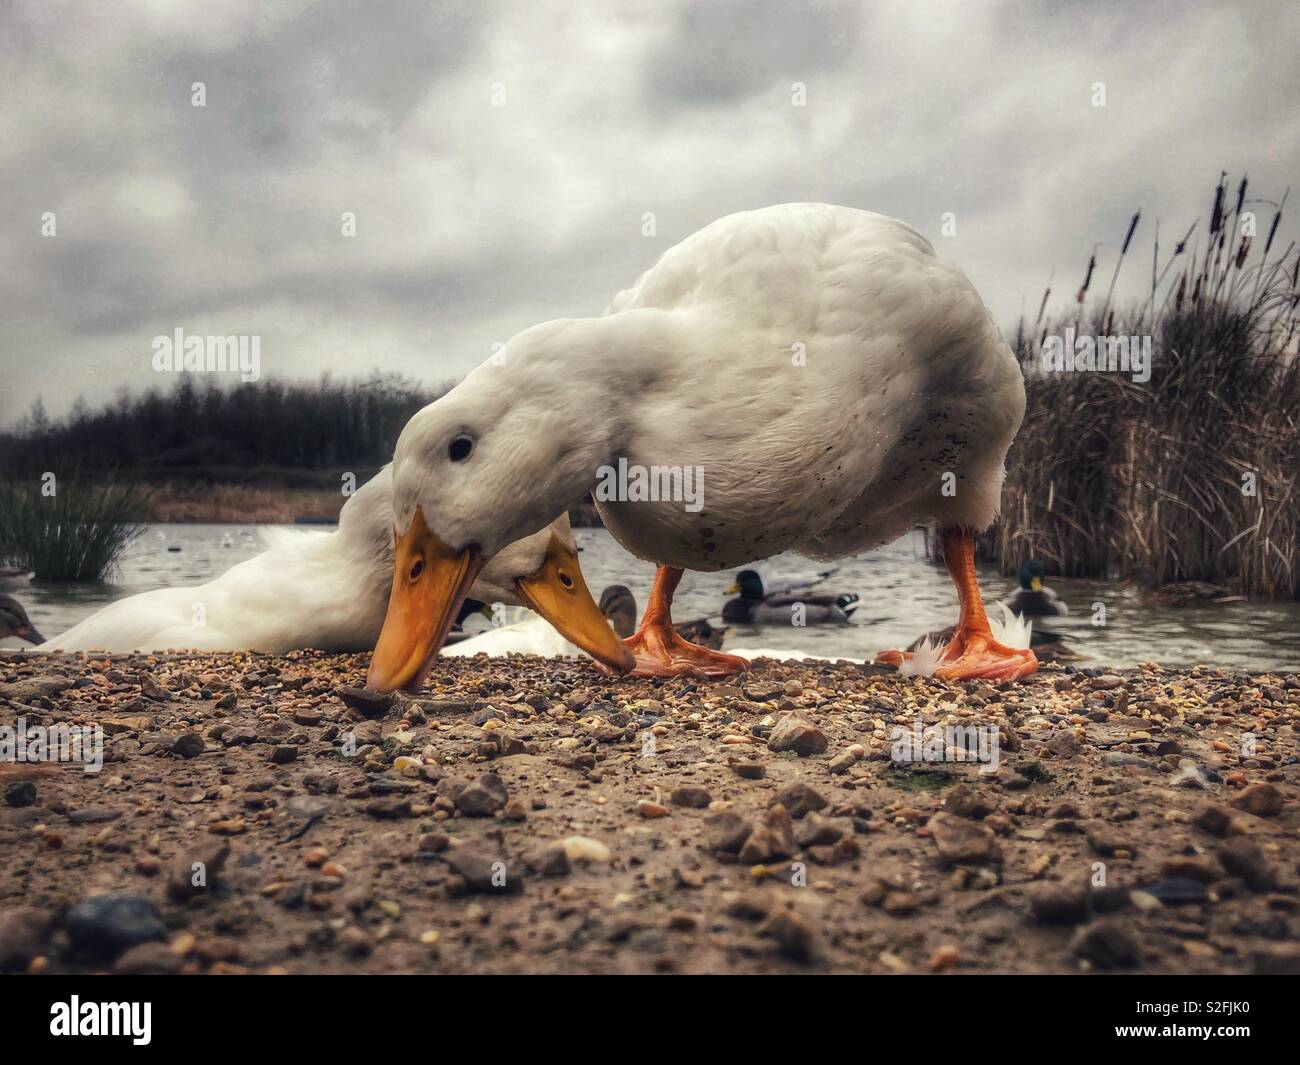 Aylesbury duck rovistando per alimenti Foto Stock